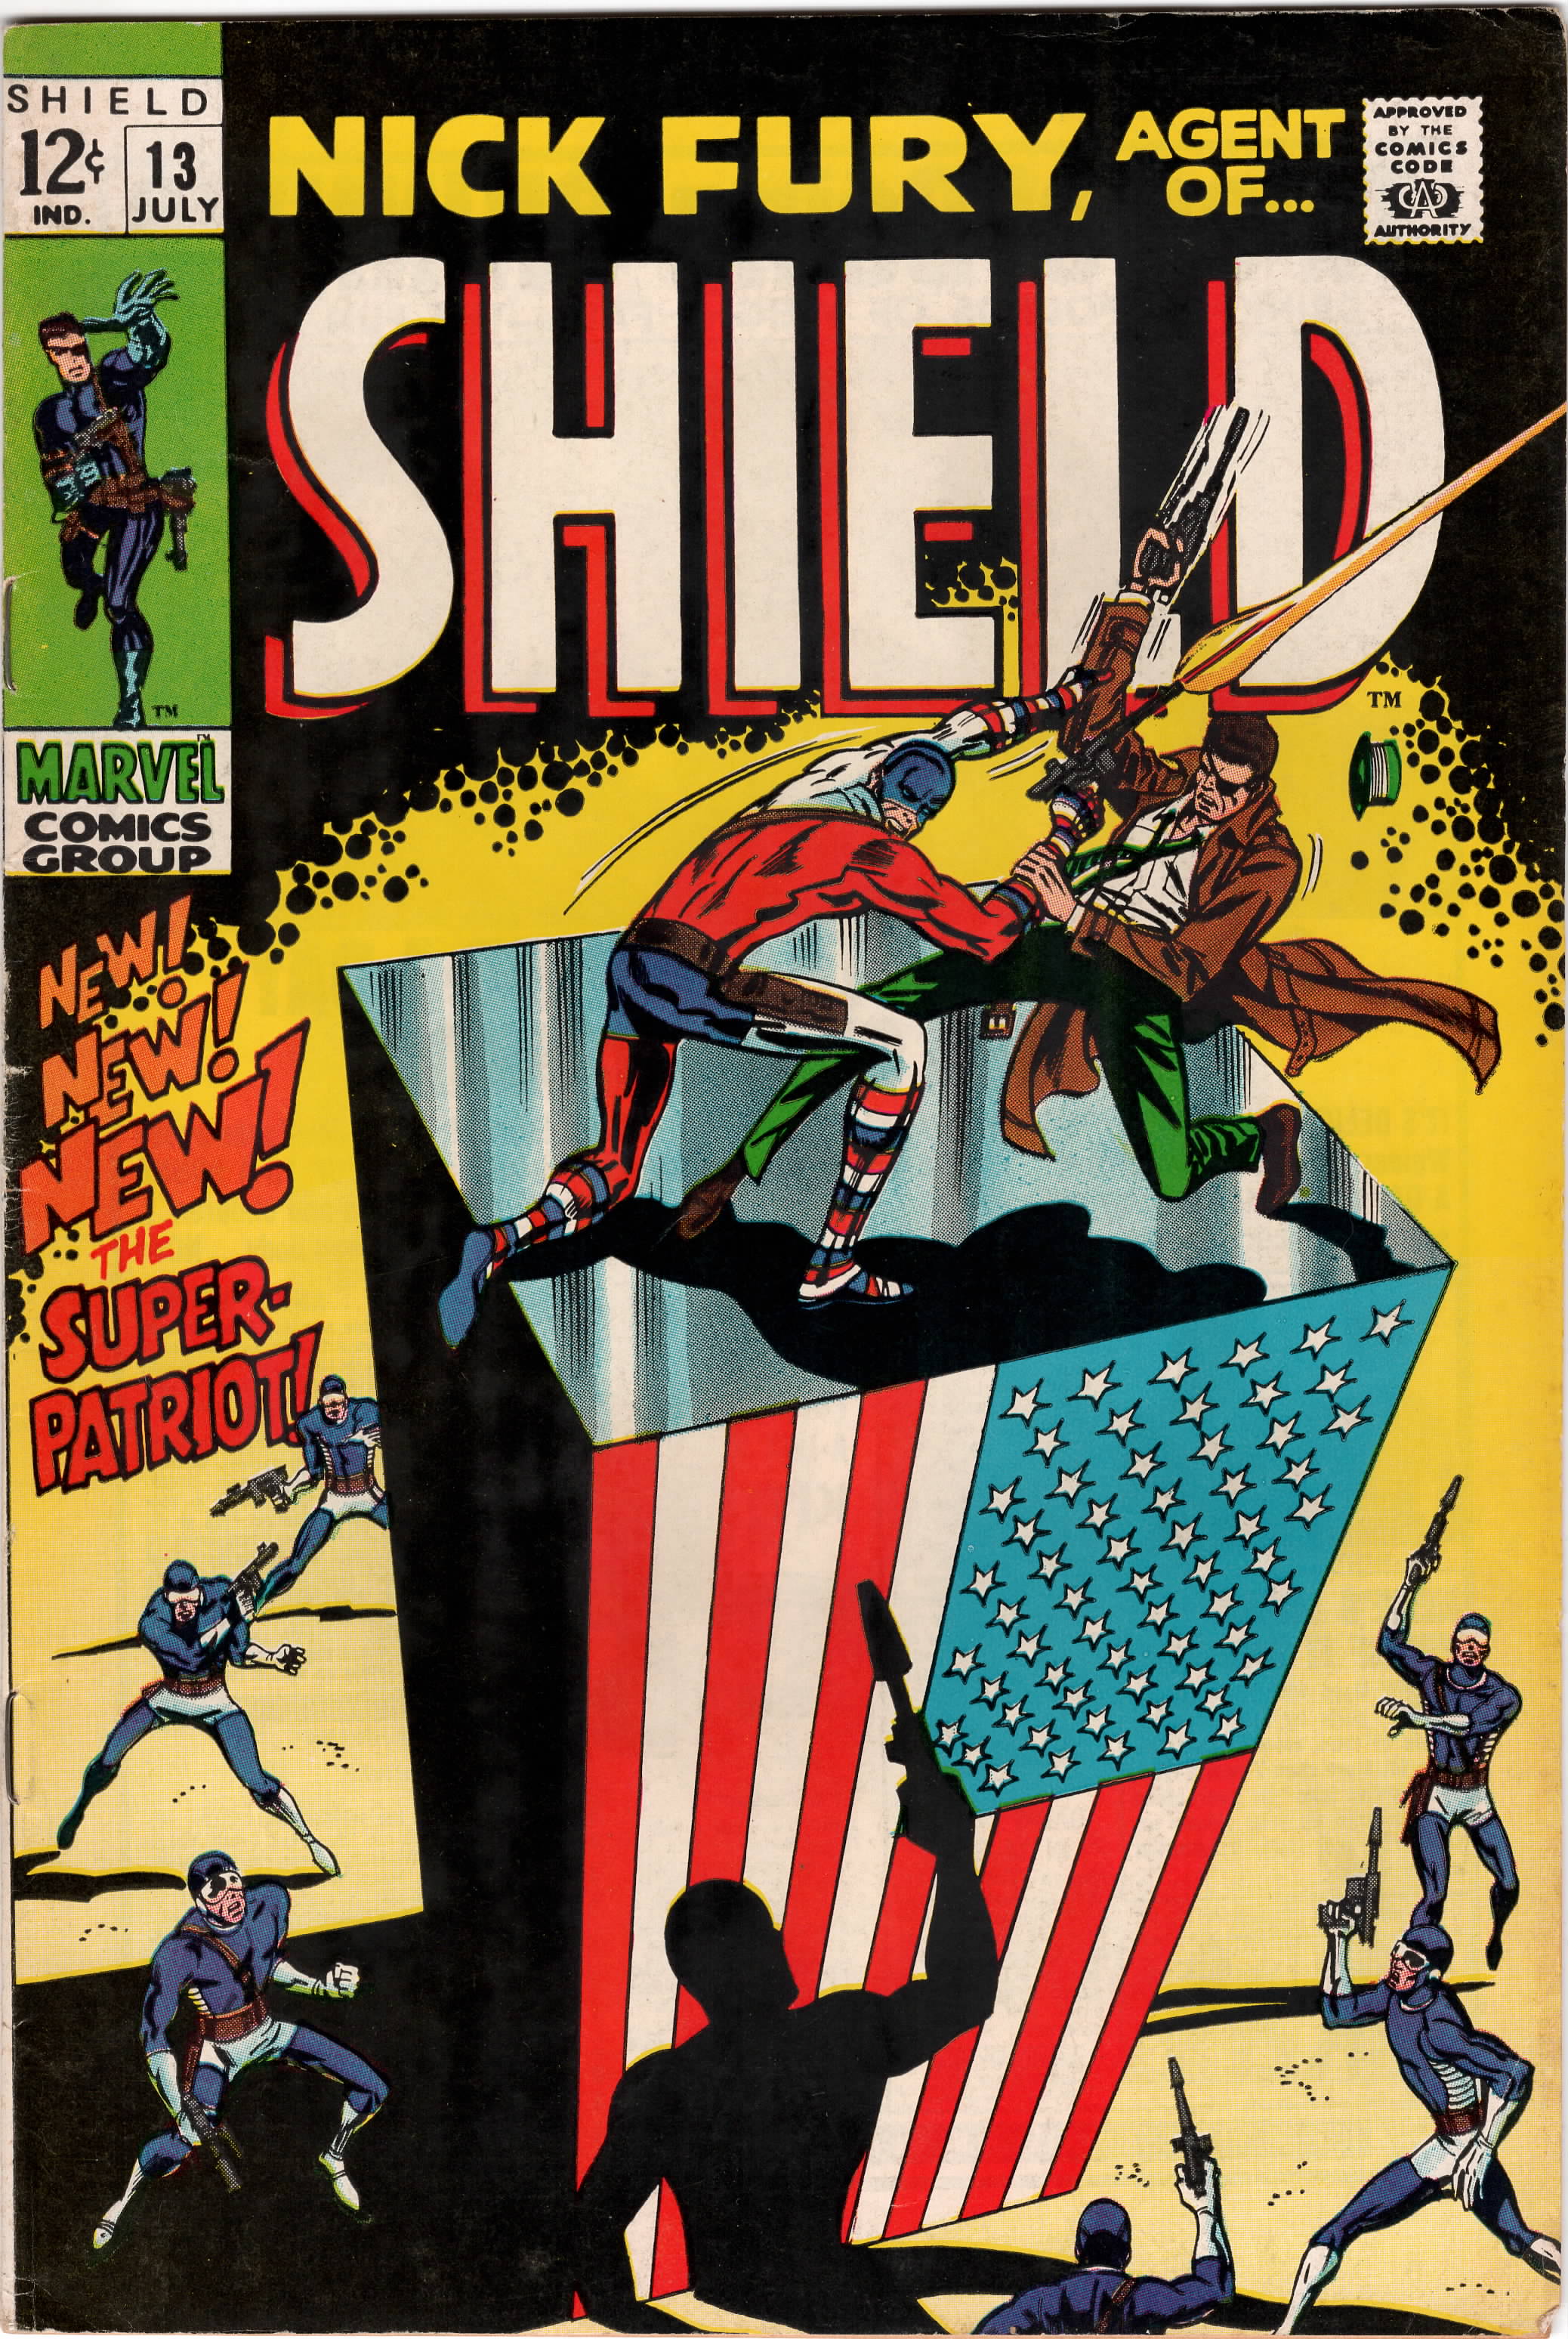 Nick Fury Agent of Shield #13